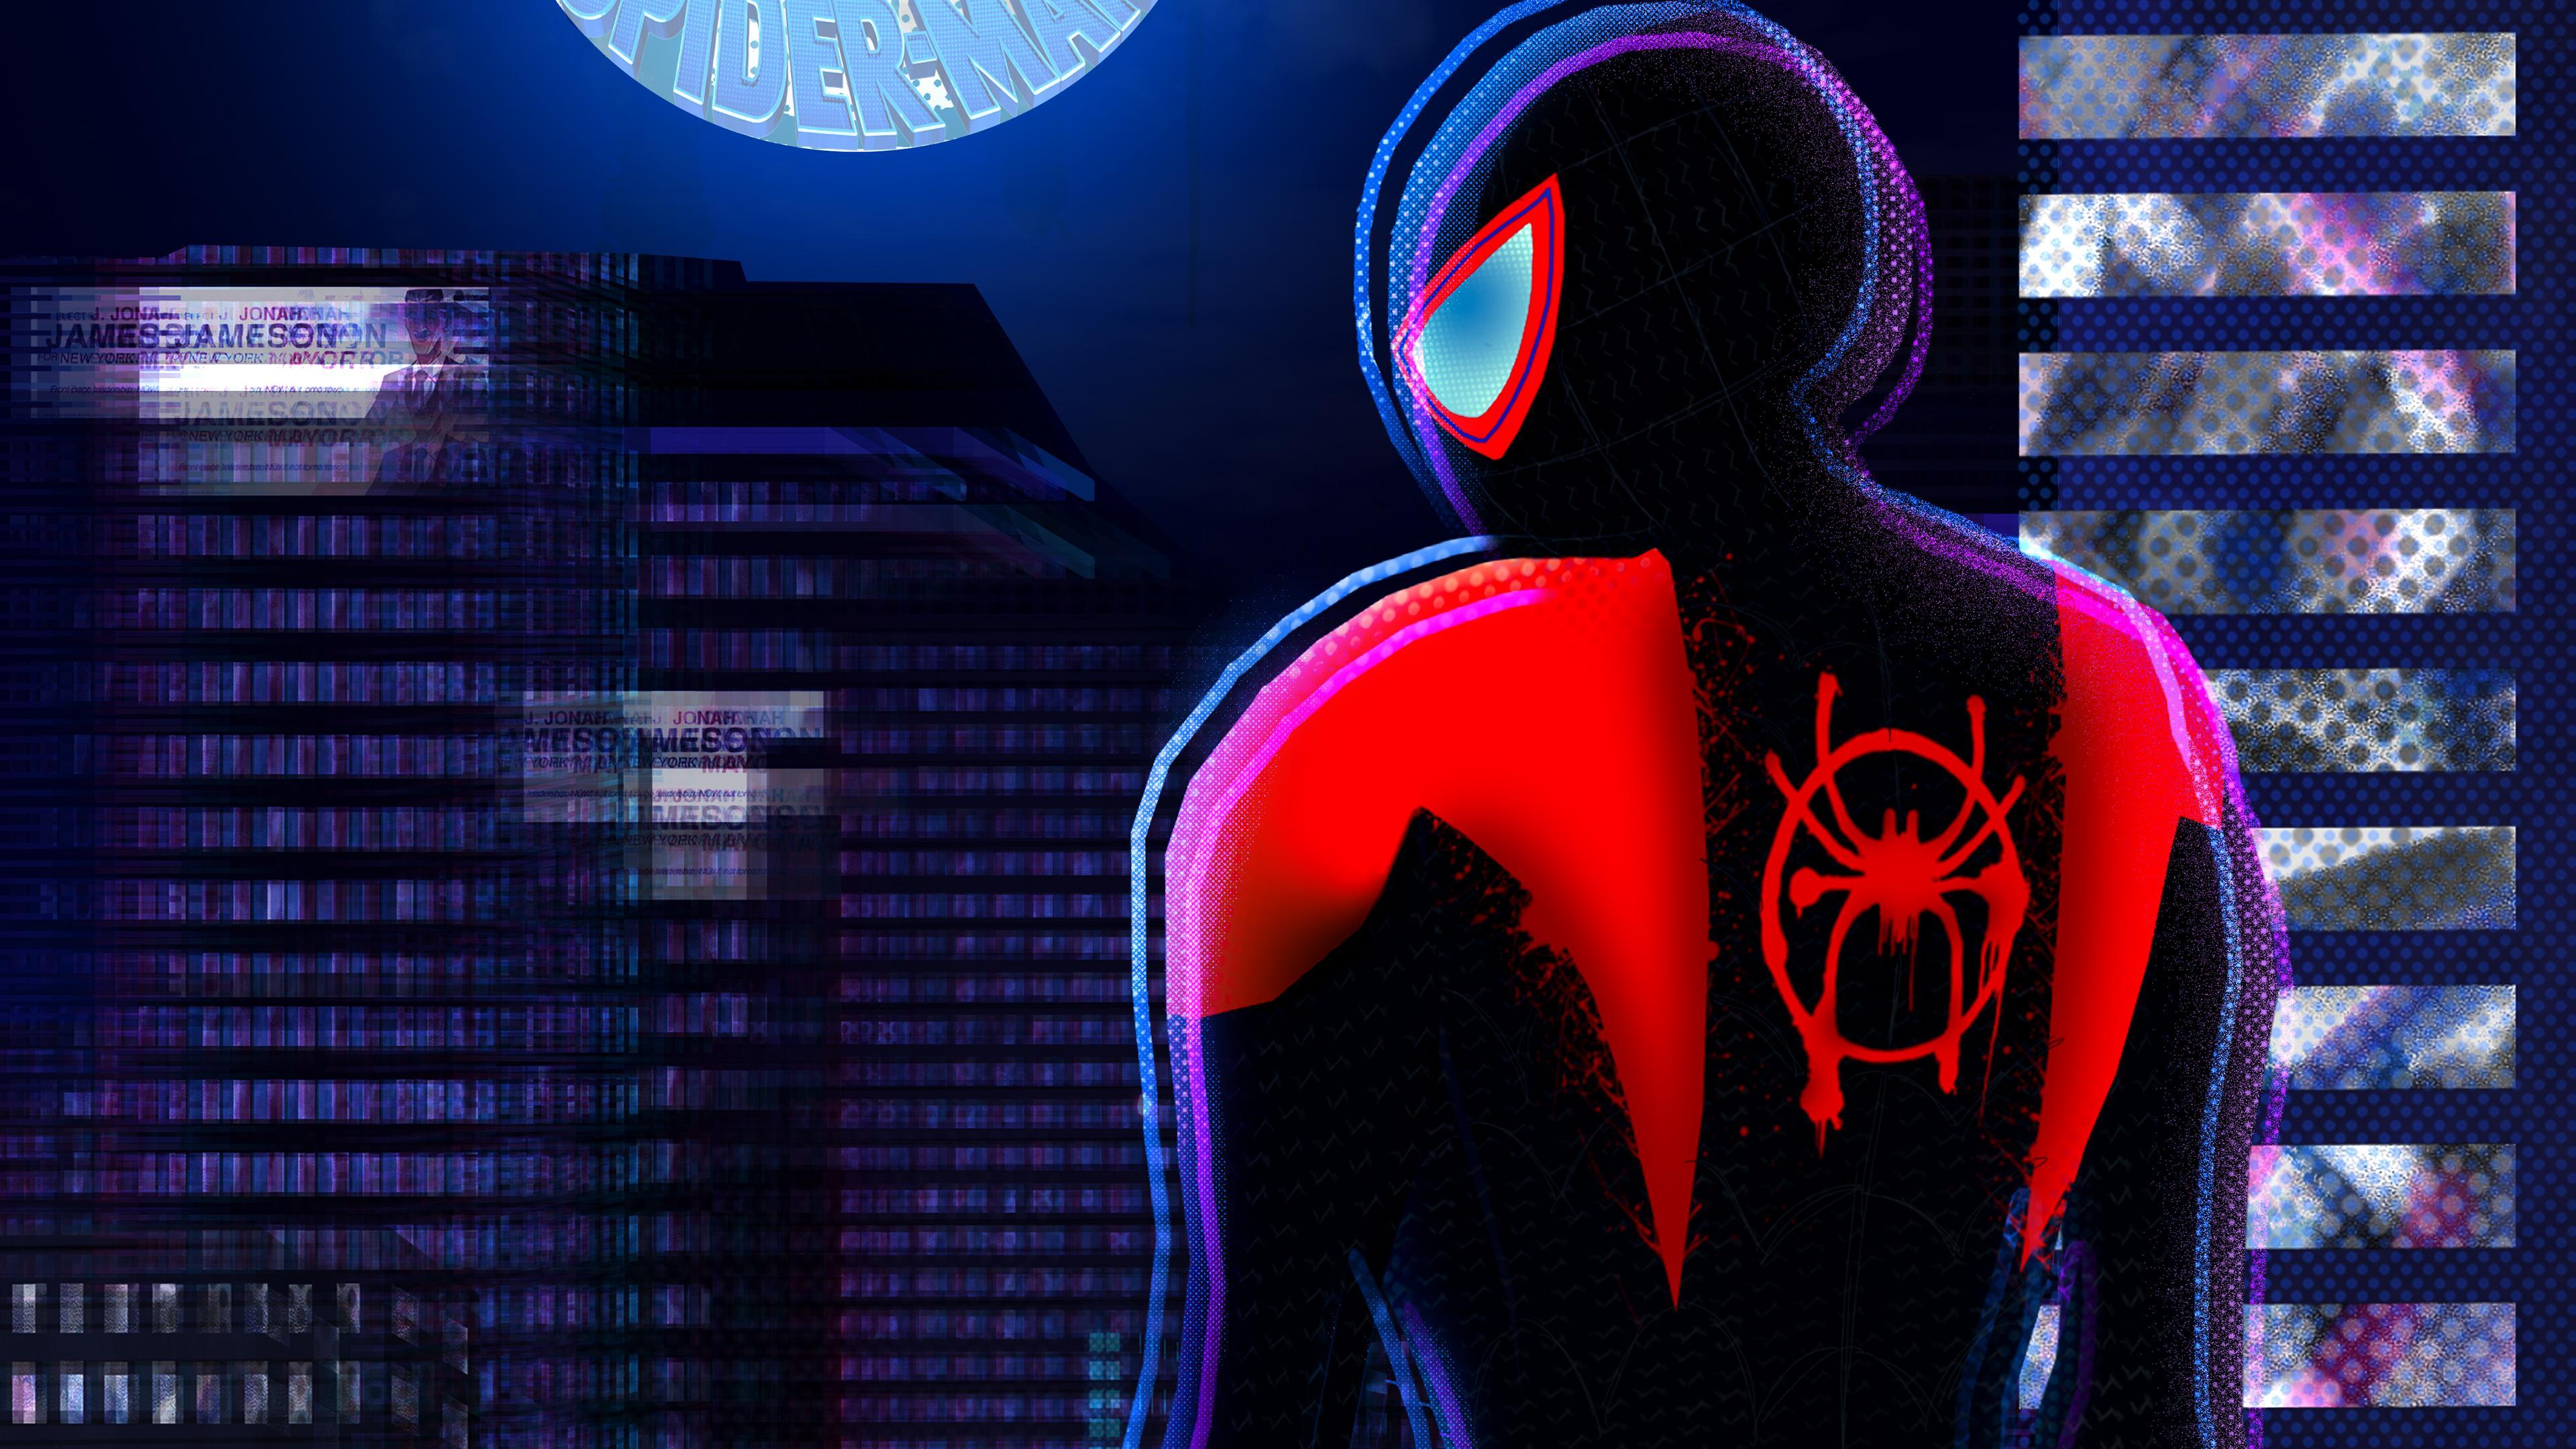 Spider Man: Into The Spider Verse 4k Ultra HD Wallpaper